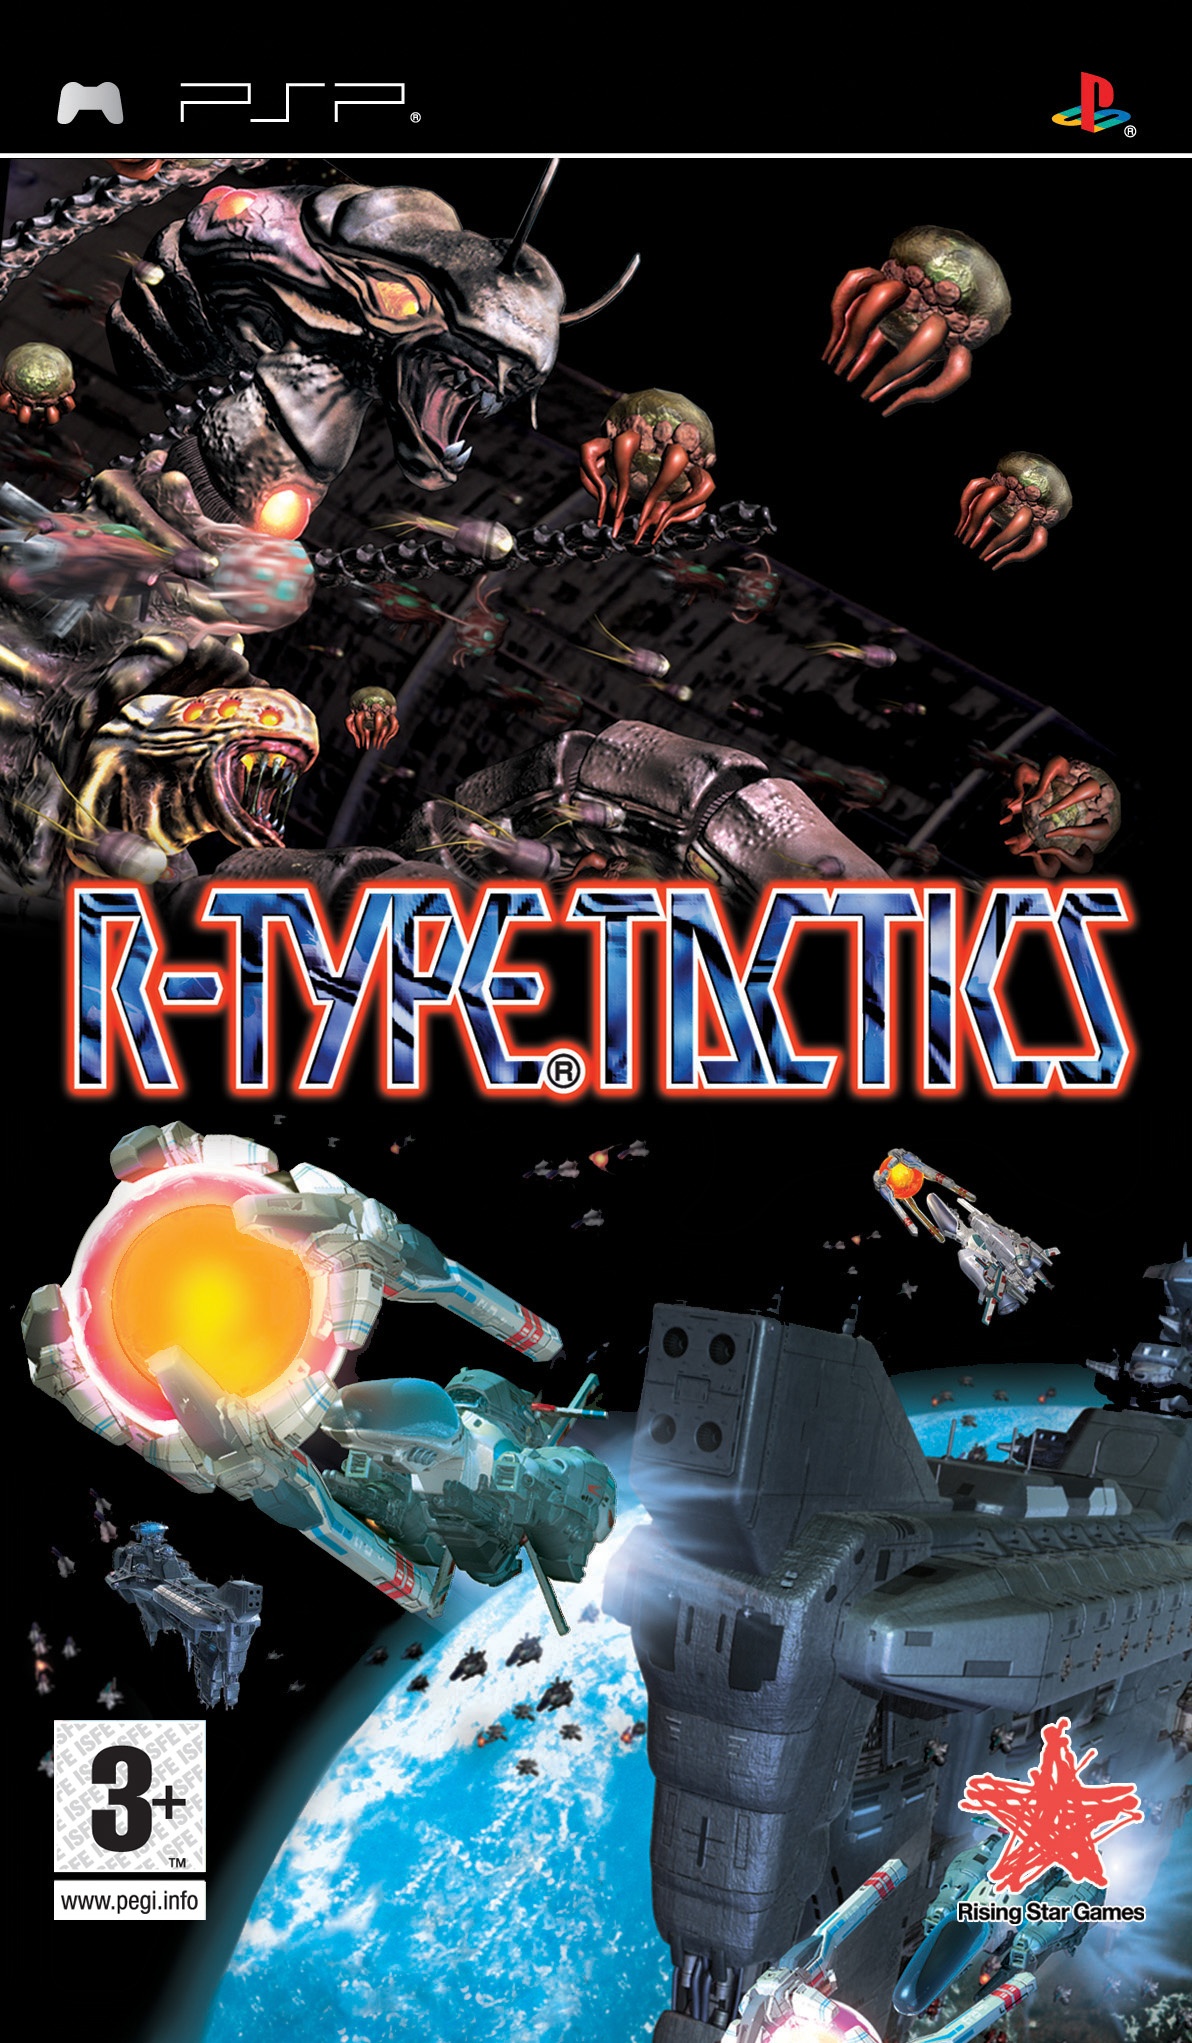 syltefar.com: R-Type Tactics (PSP)